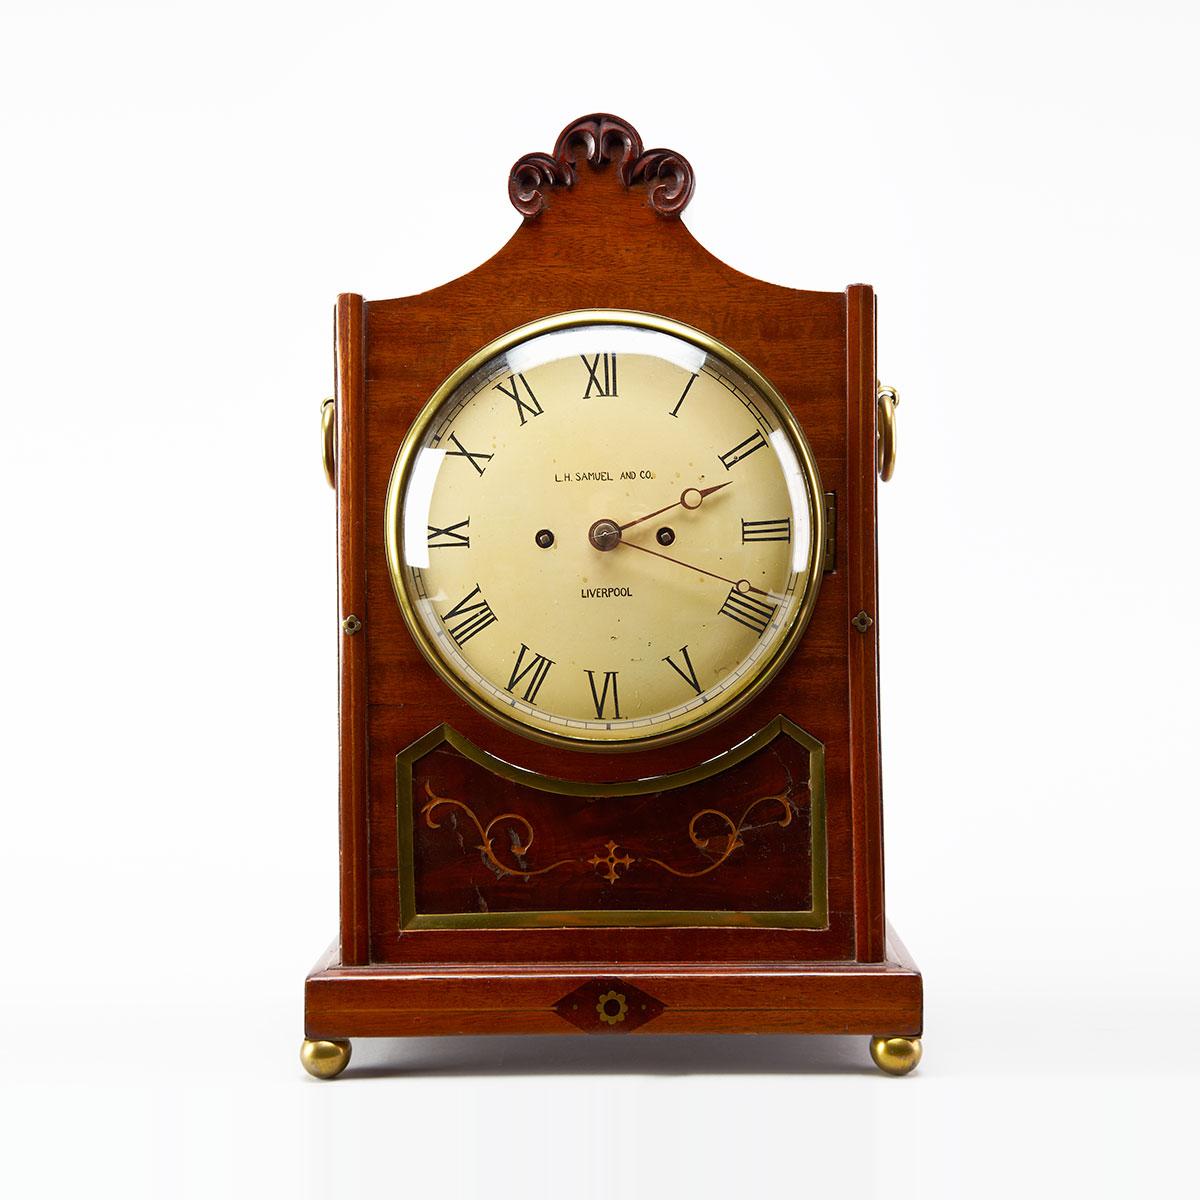 William IV Mahogany Bracket Clock, L. H. Samuel and Co., Liverpool, c.1830